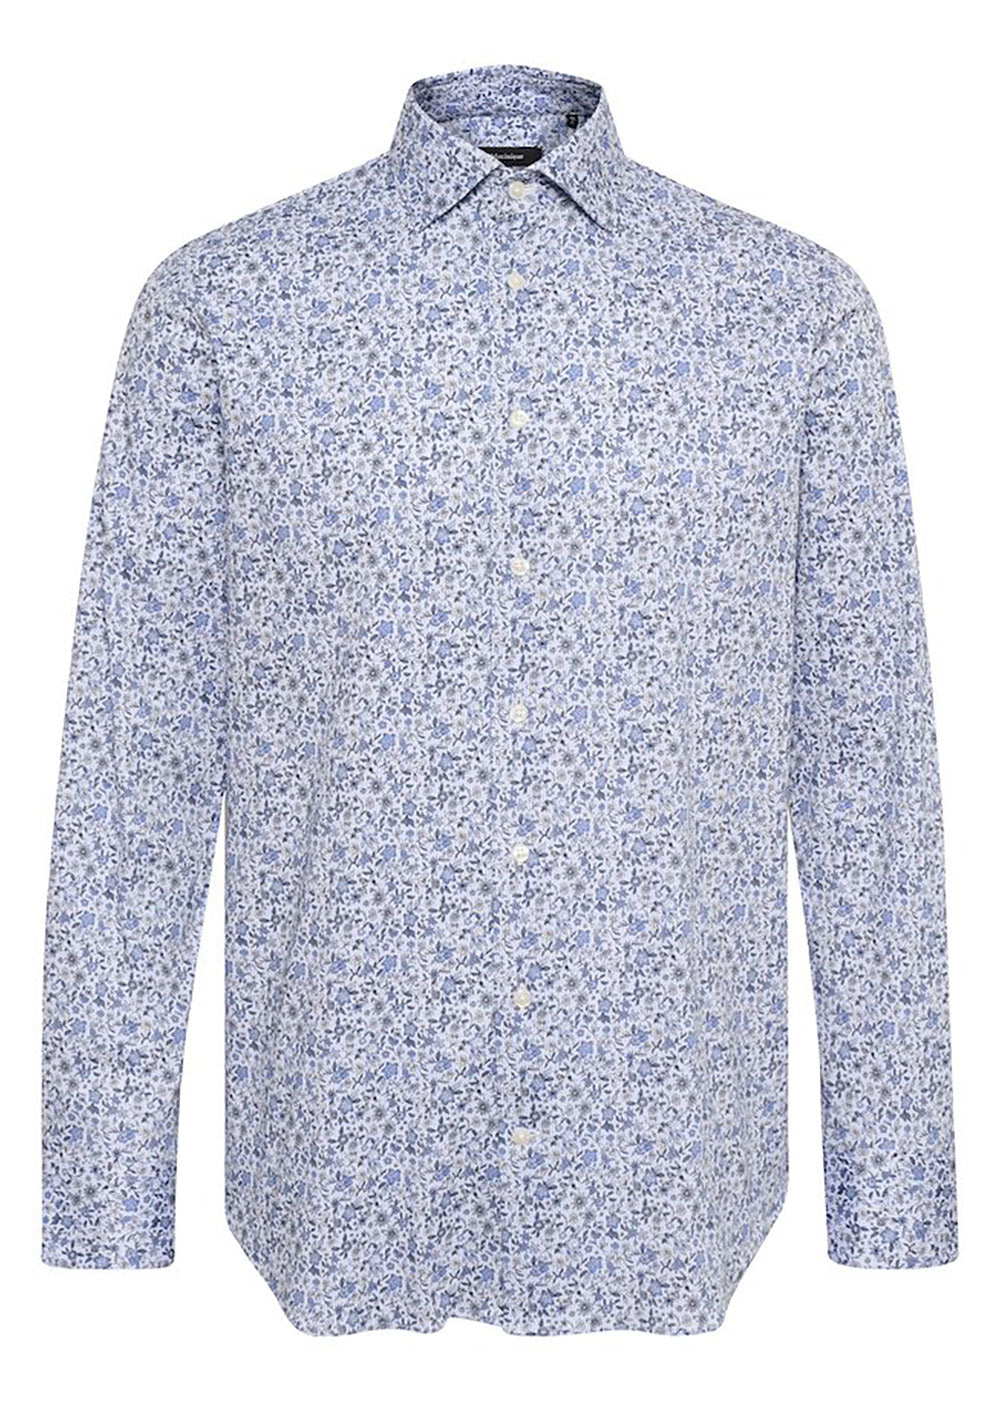 Marc Long Sleeve Shirt - Chambray Blue - Matinique - Danali - 30204077